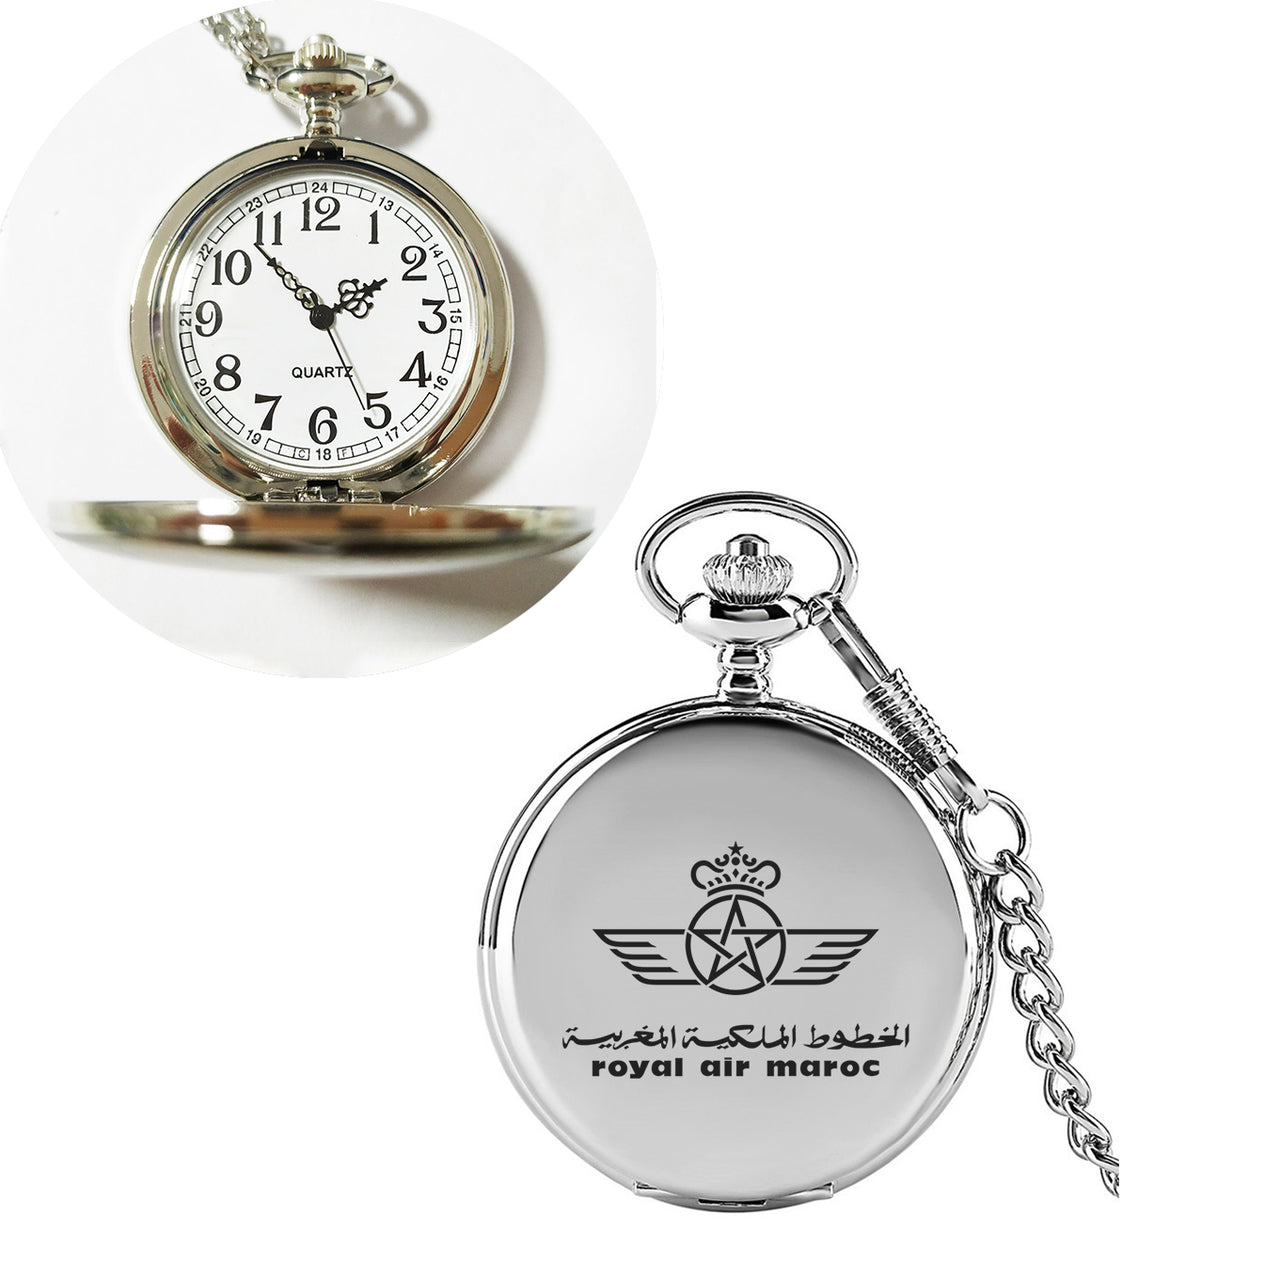 Royal Air Maroc Designed Pocket Watches